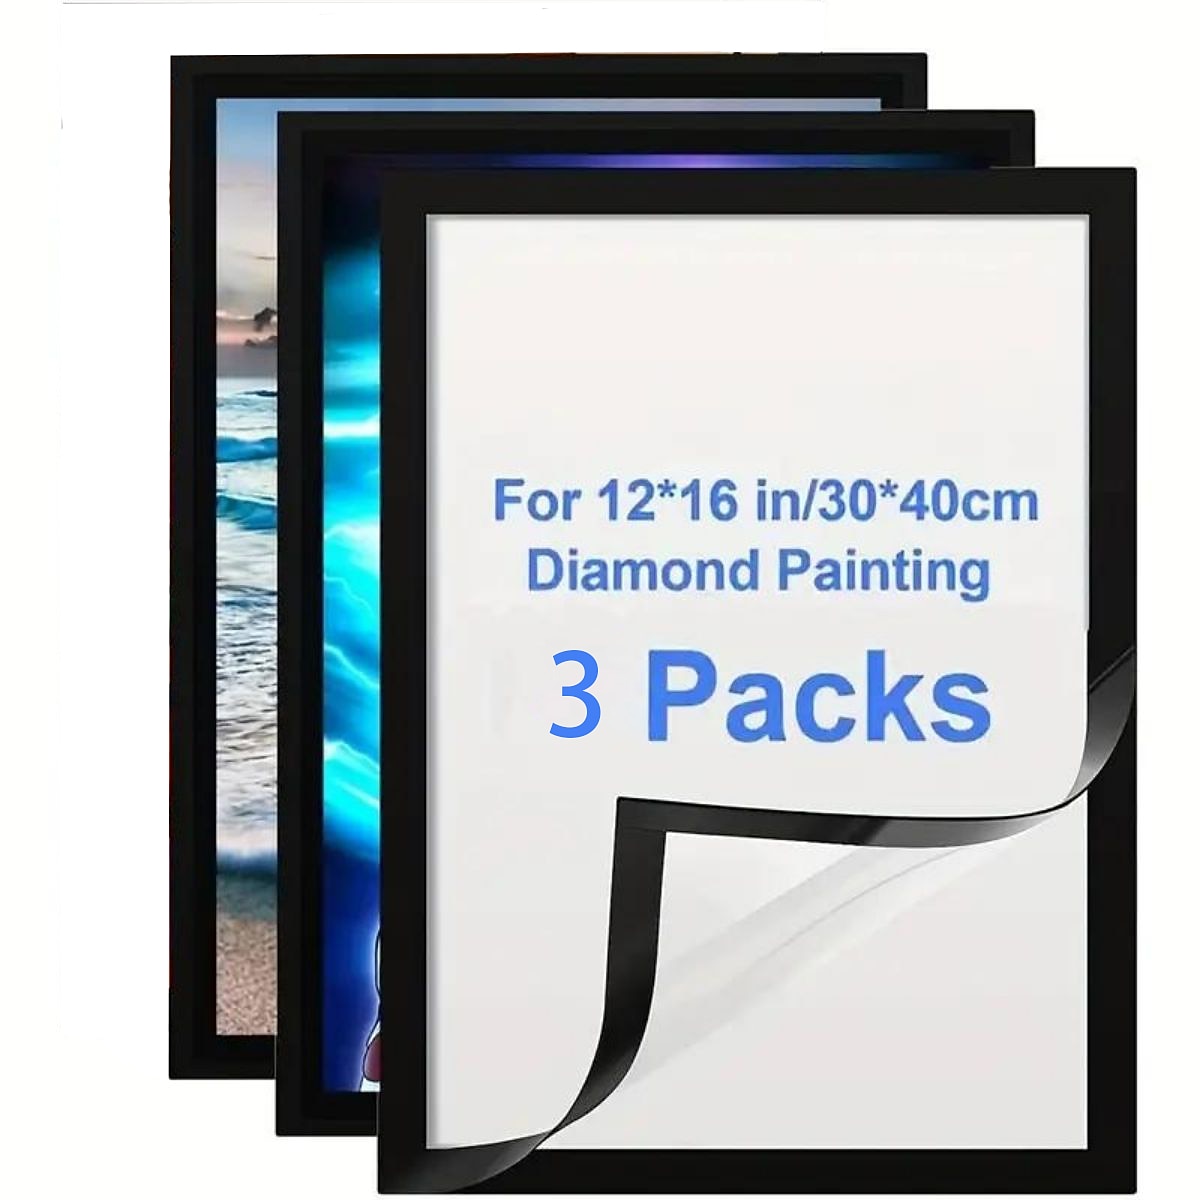 Magnetic Diamond Art Frames 30x40cm Self-Adhesive Wall Gallery